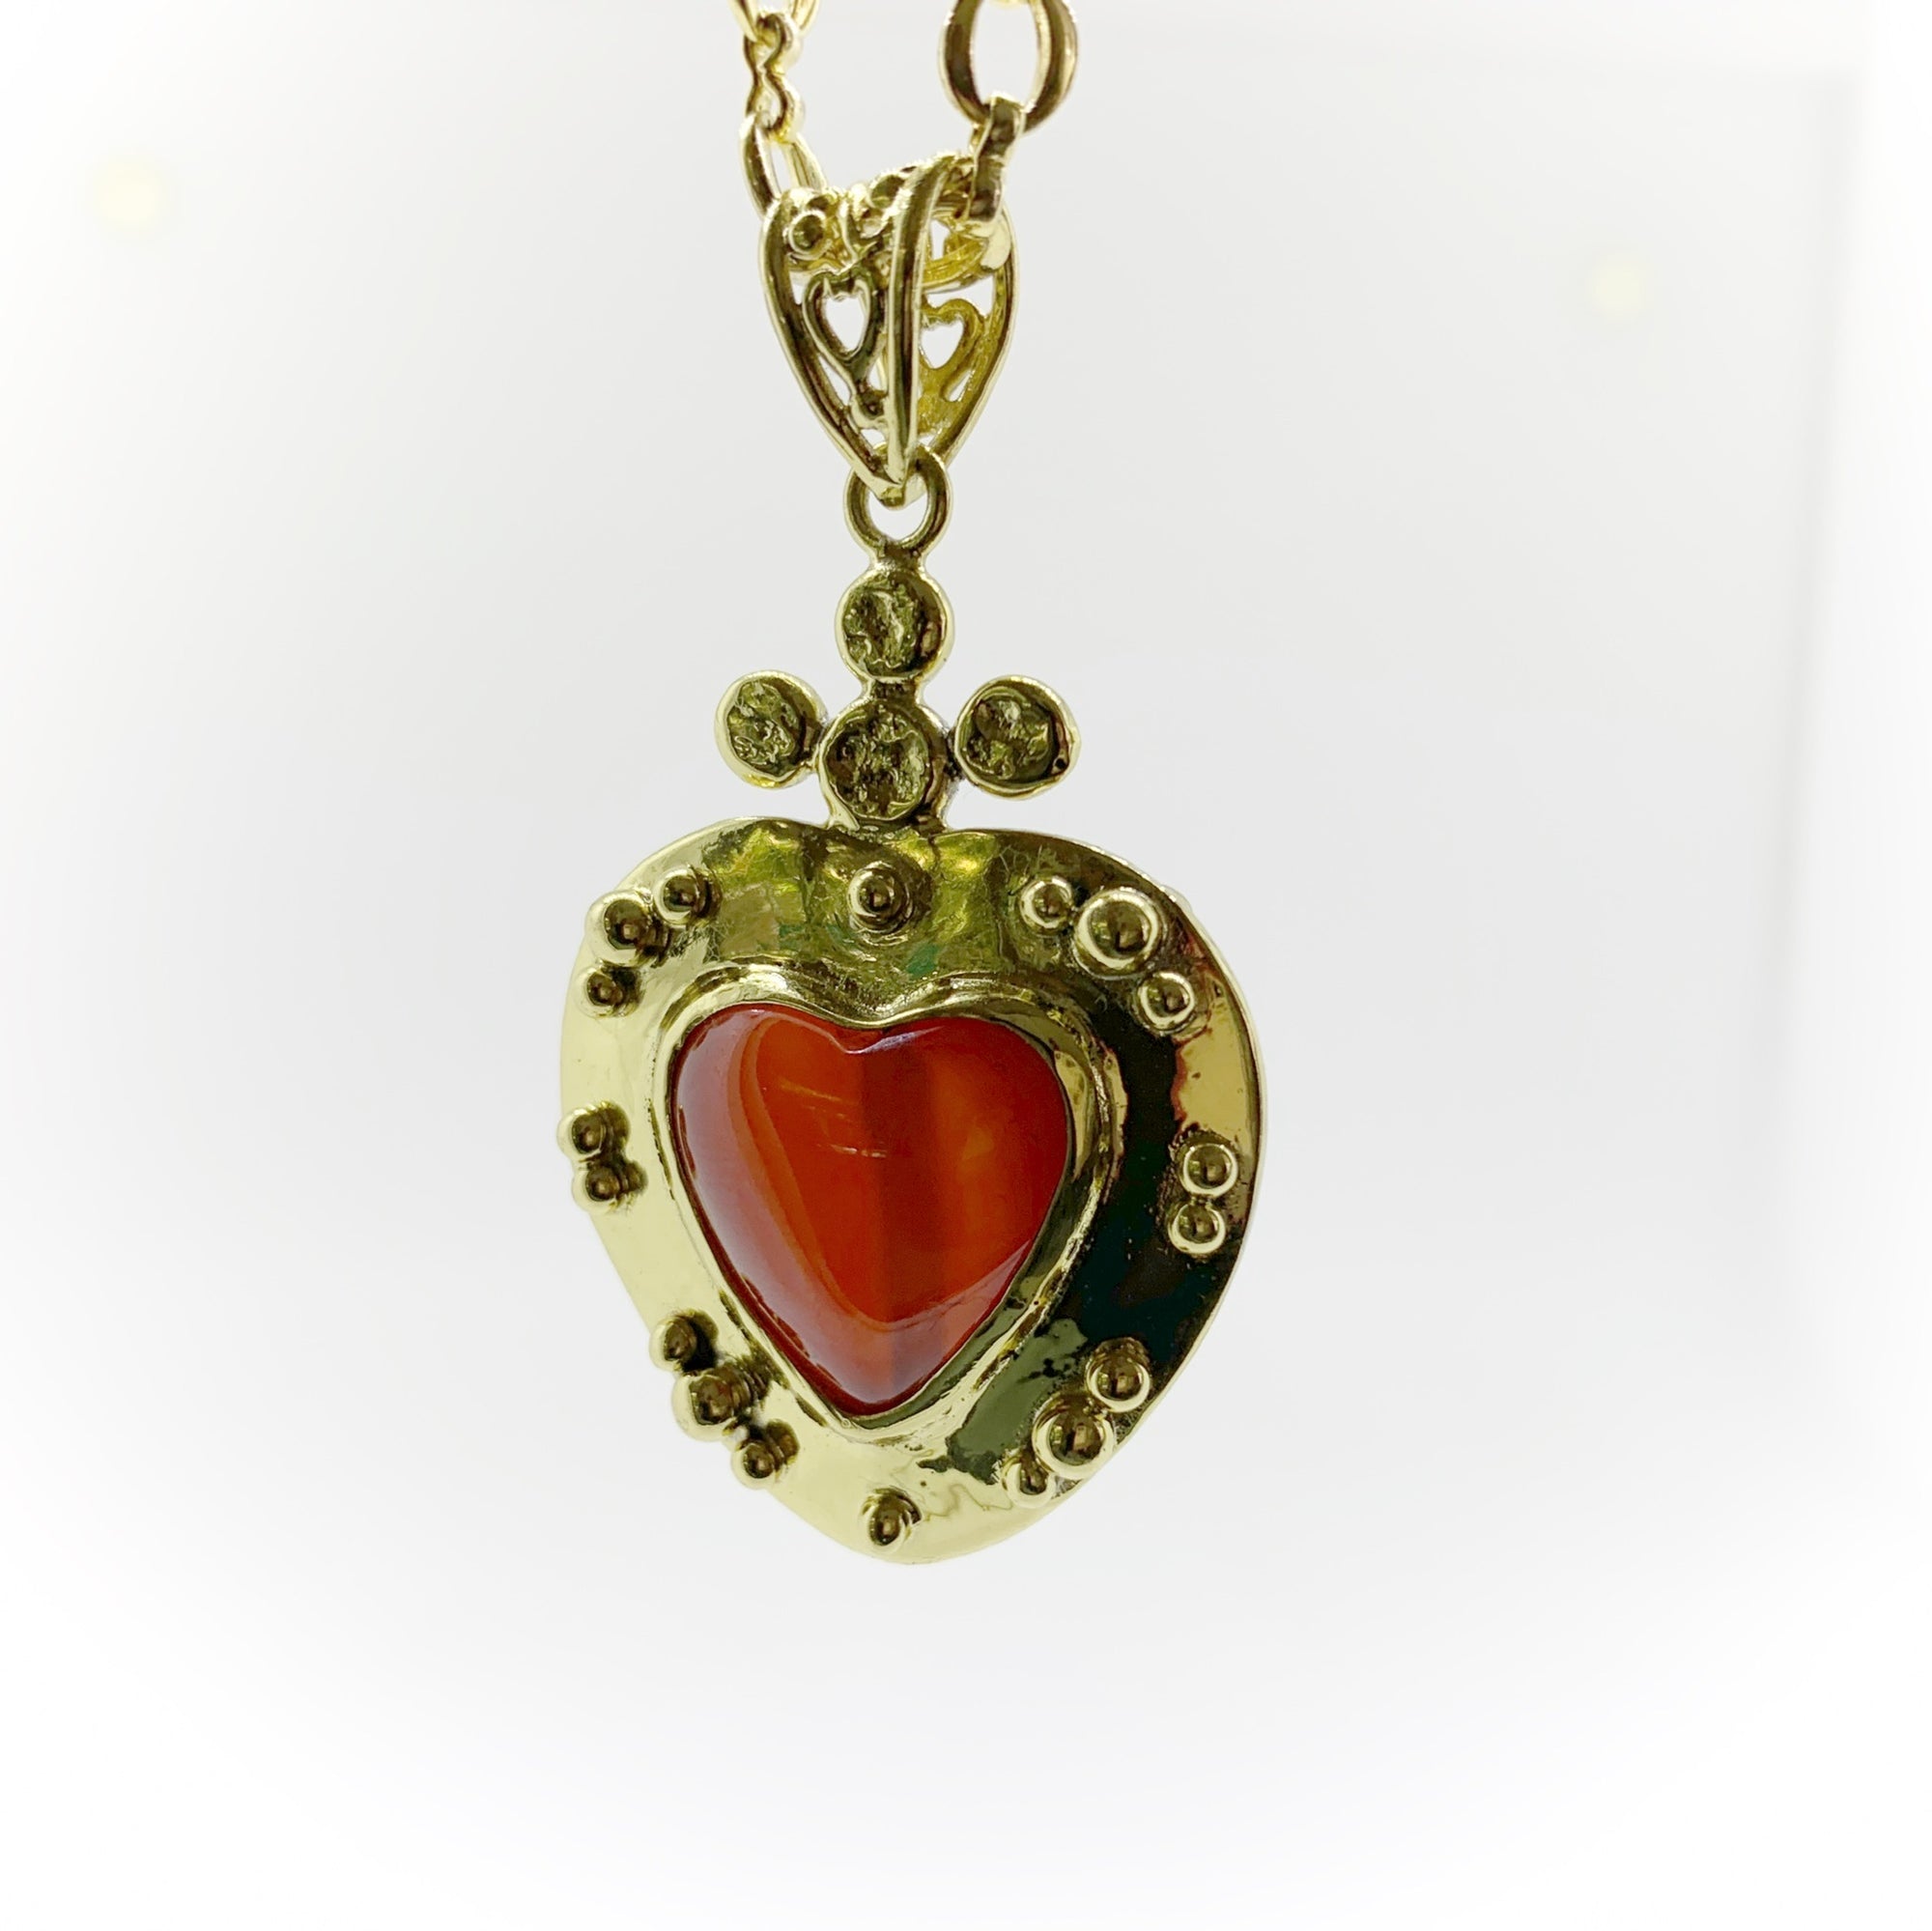 Buy Carnelian Heart Pendant Necklace Online in India - Etsy